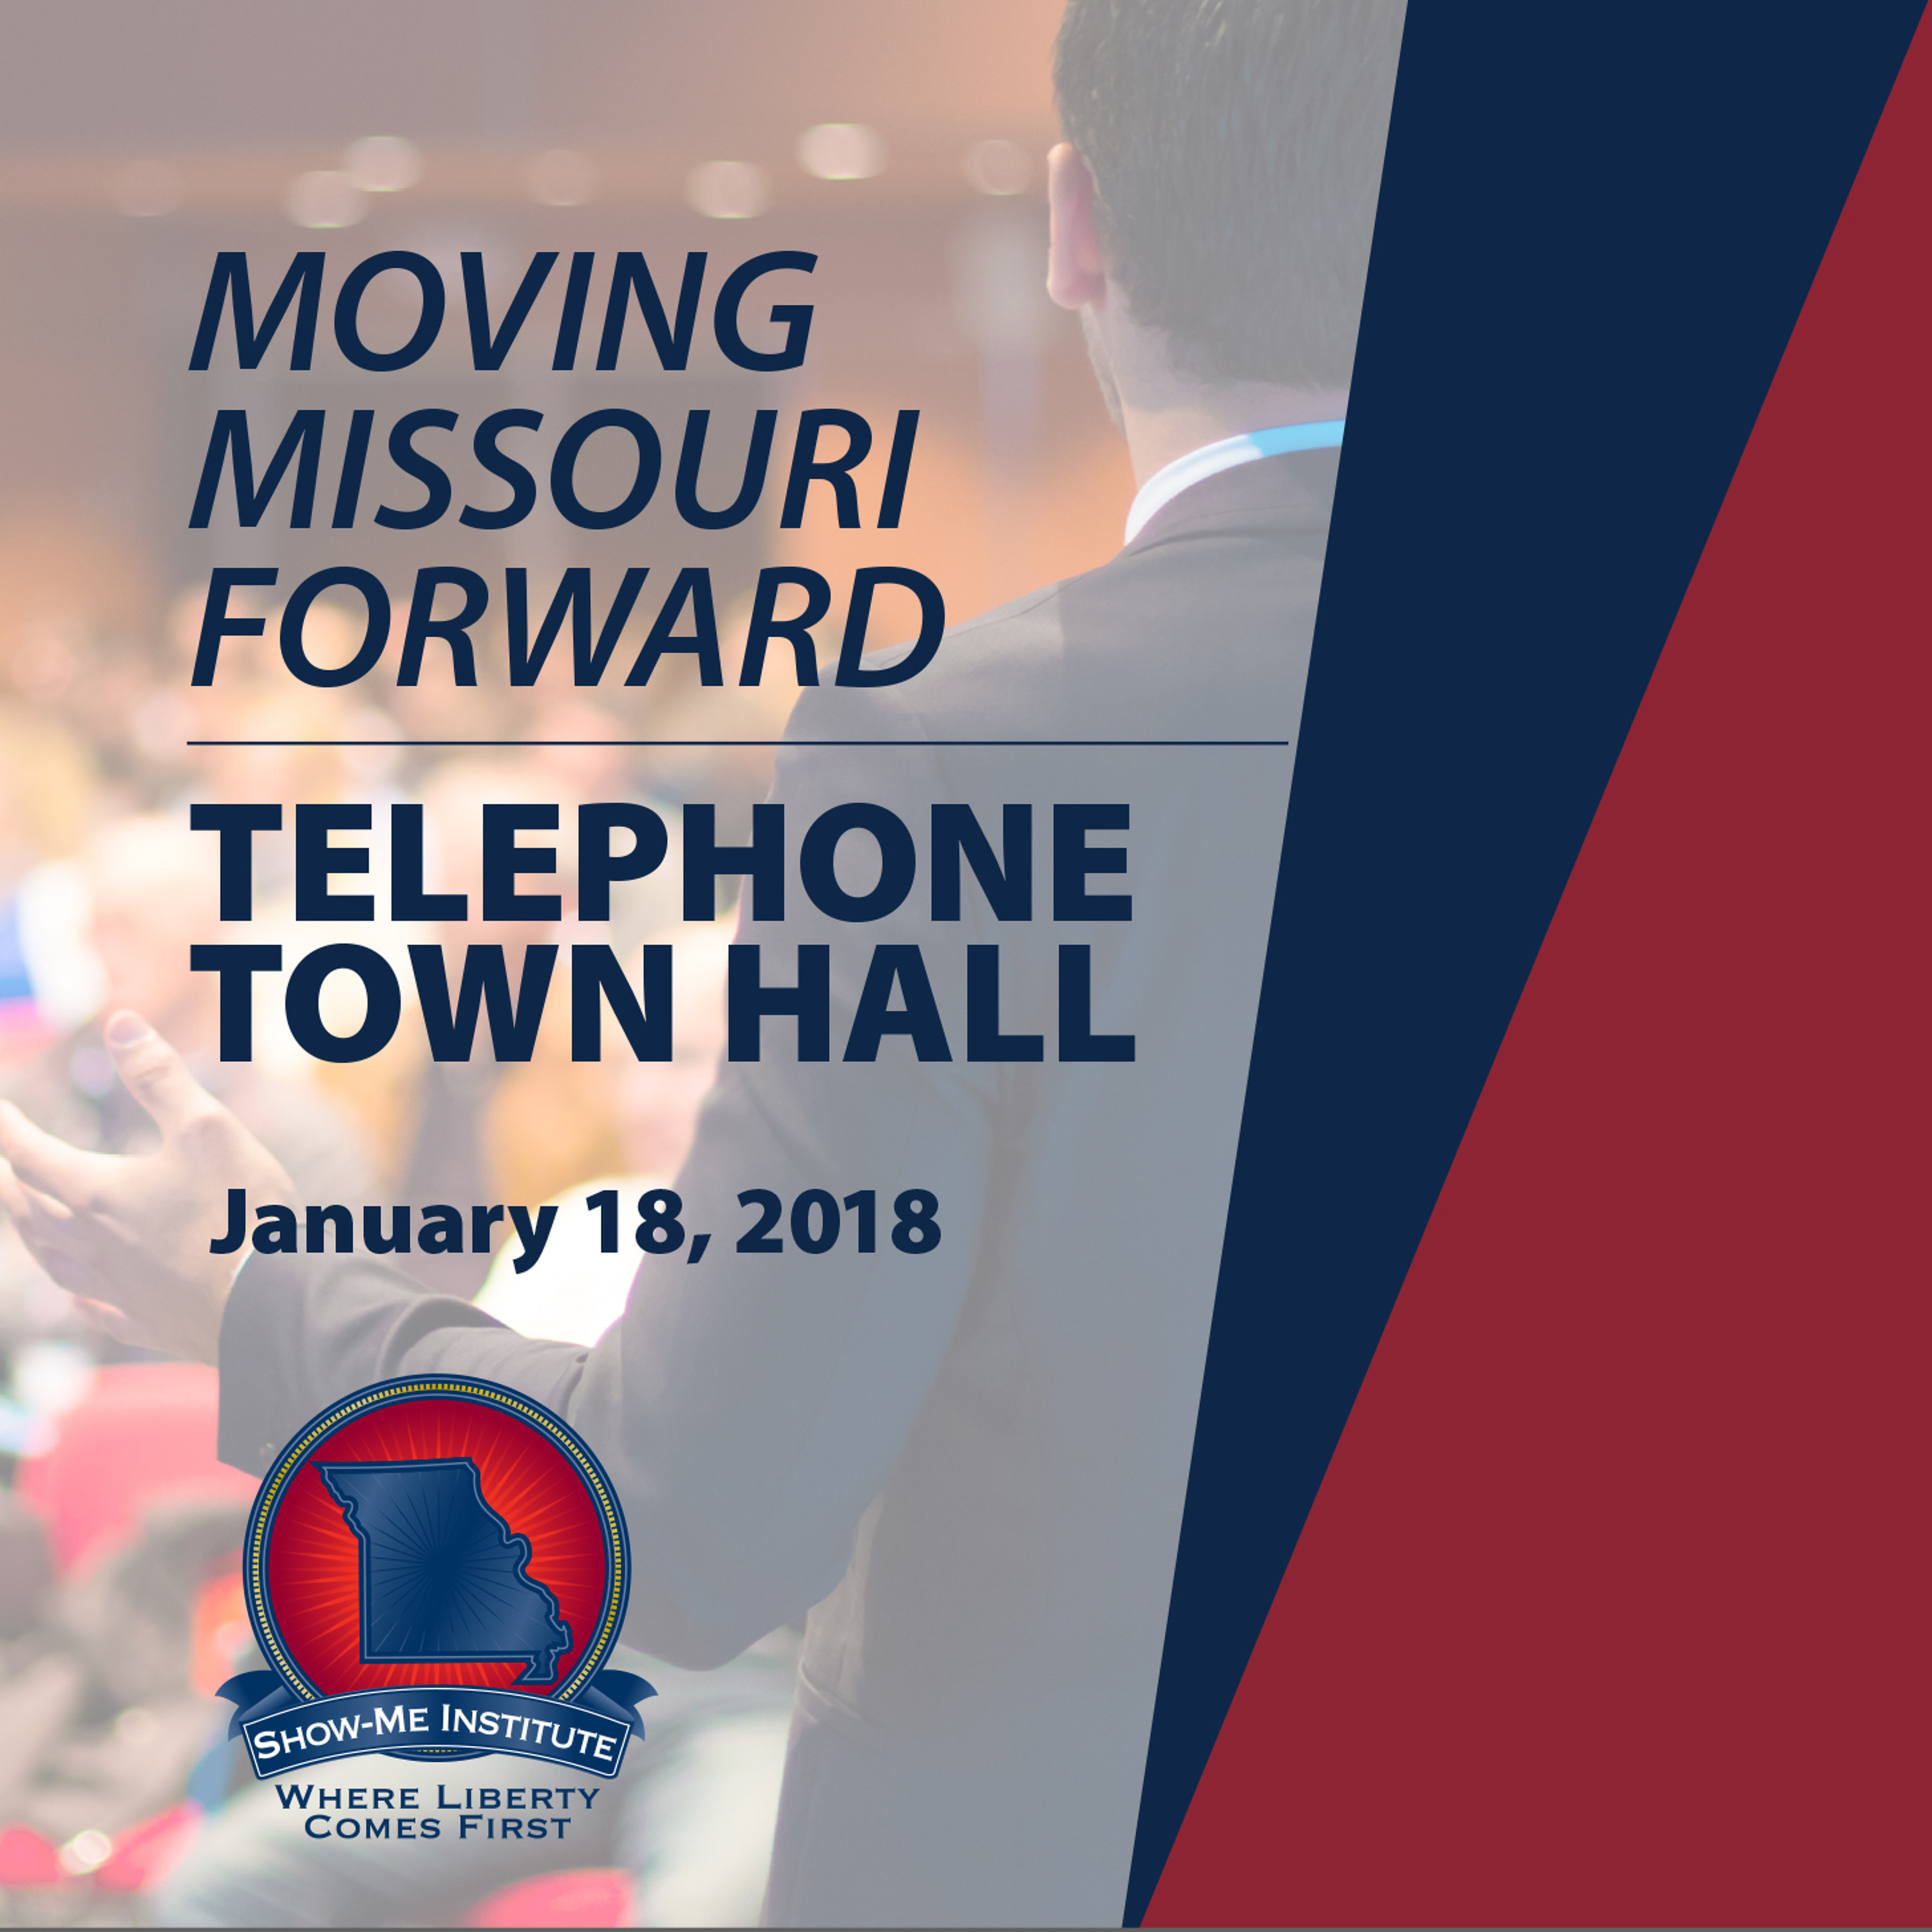 Telephone Town Hall - January 18, 2018